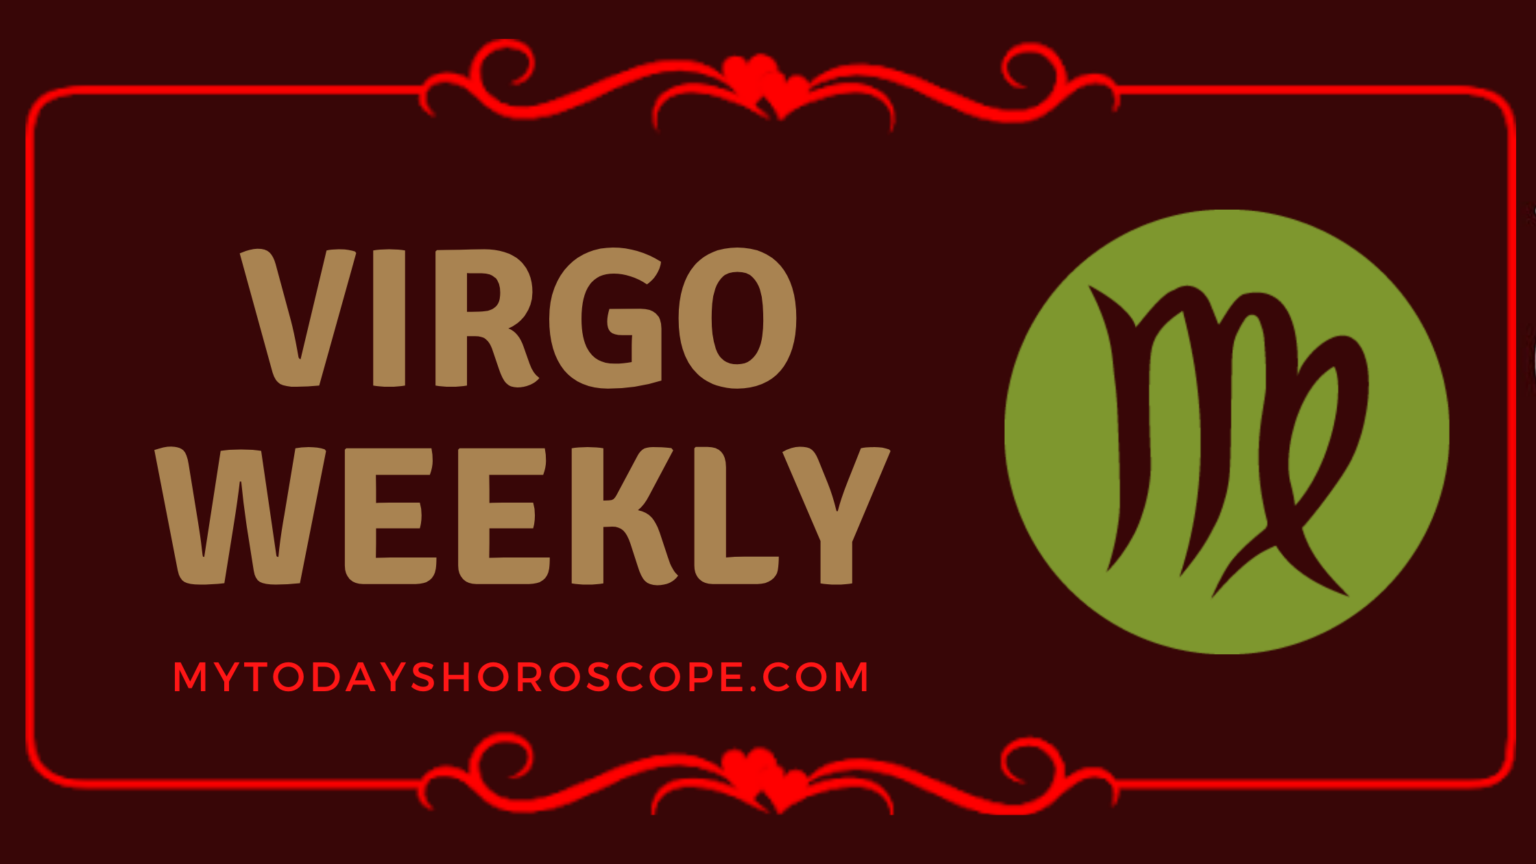 VIRGO WEEKLY HOROSCOPE